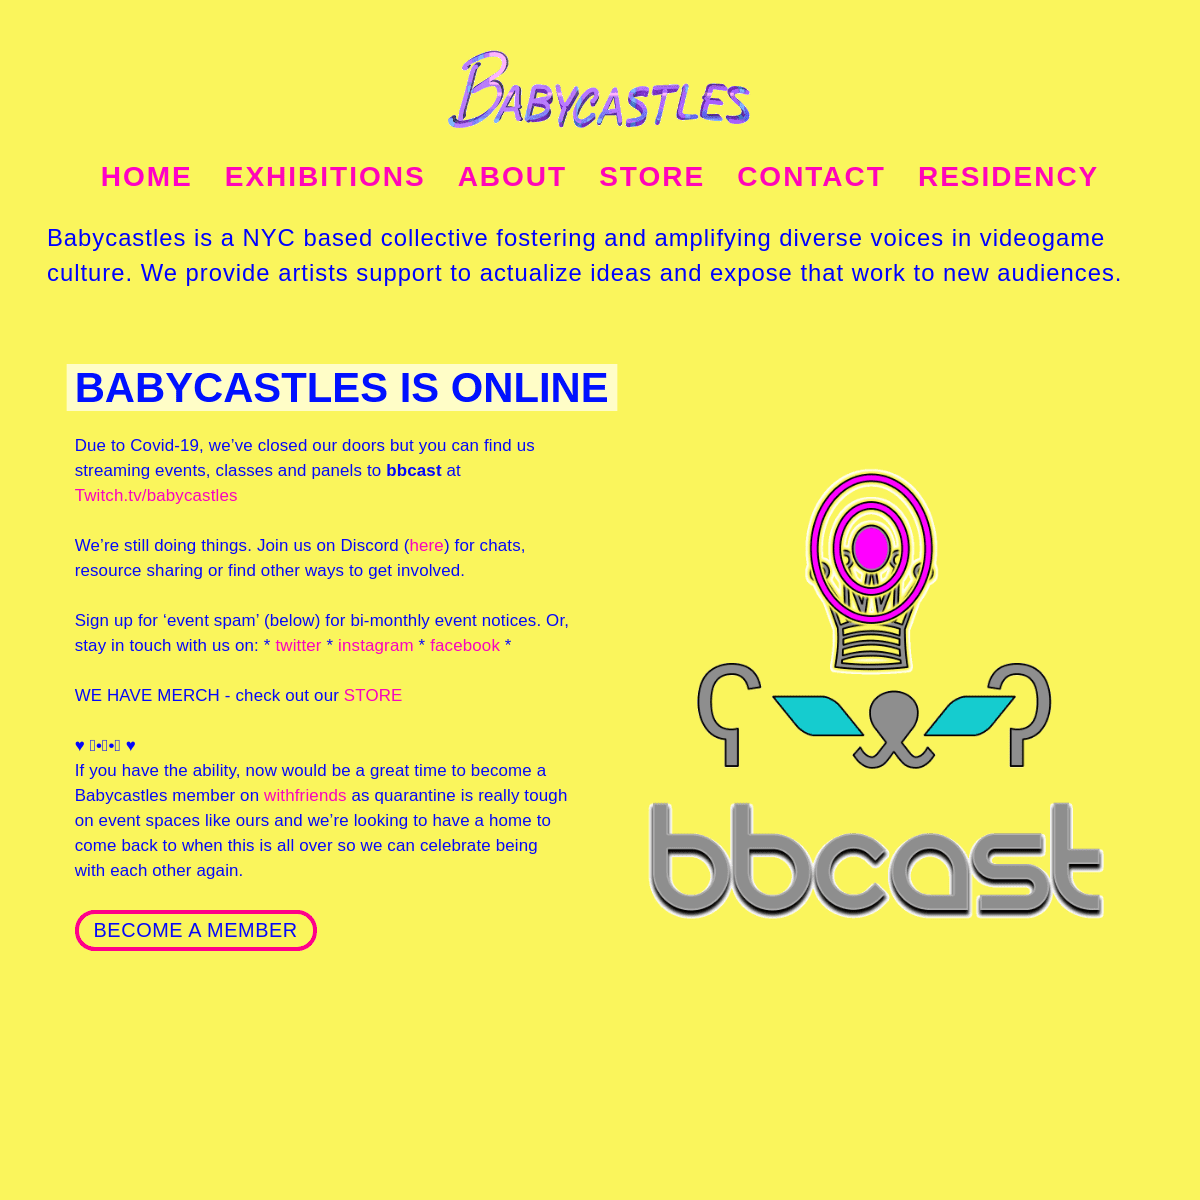 A complete backup of https://babycastles.com